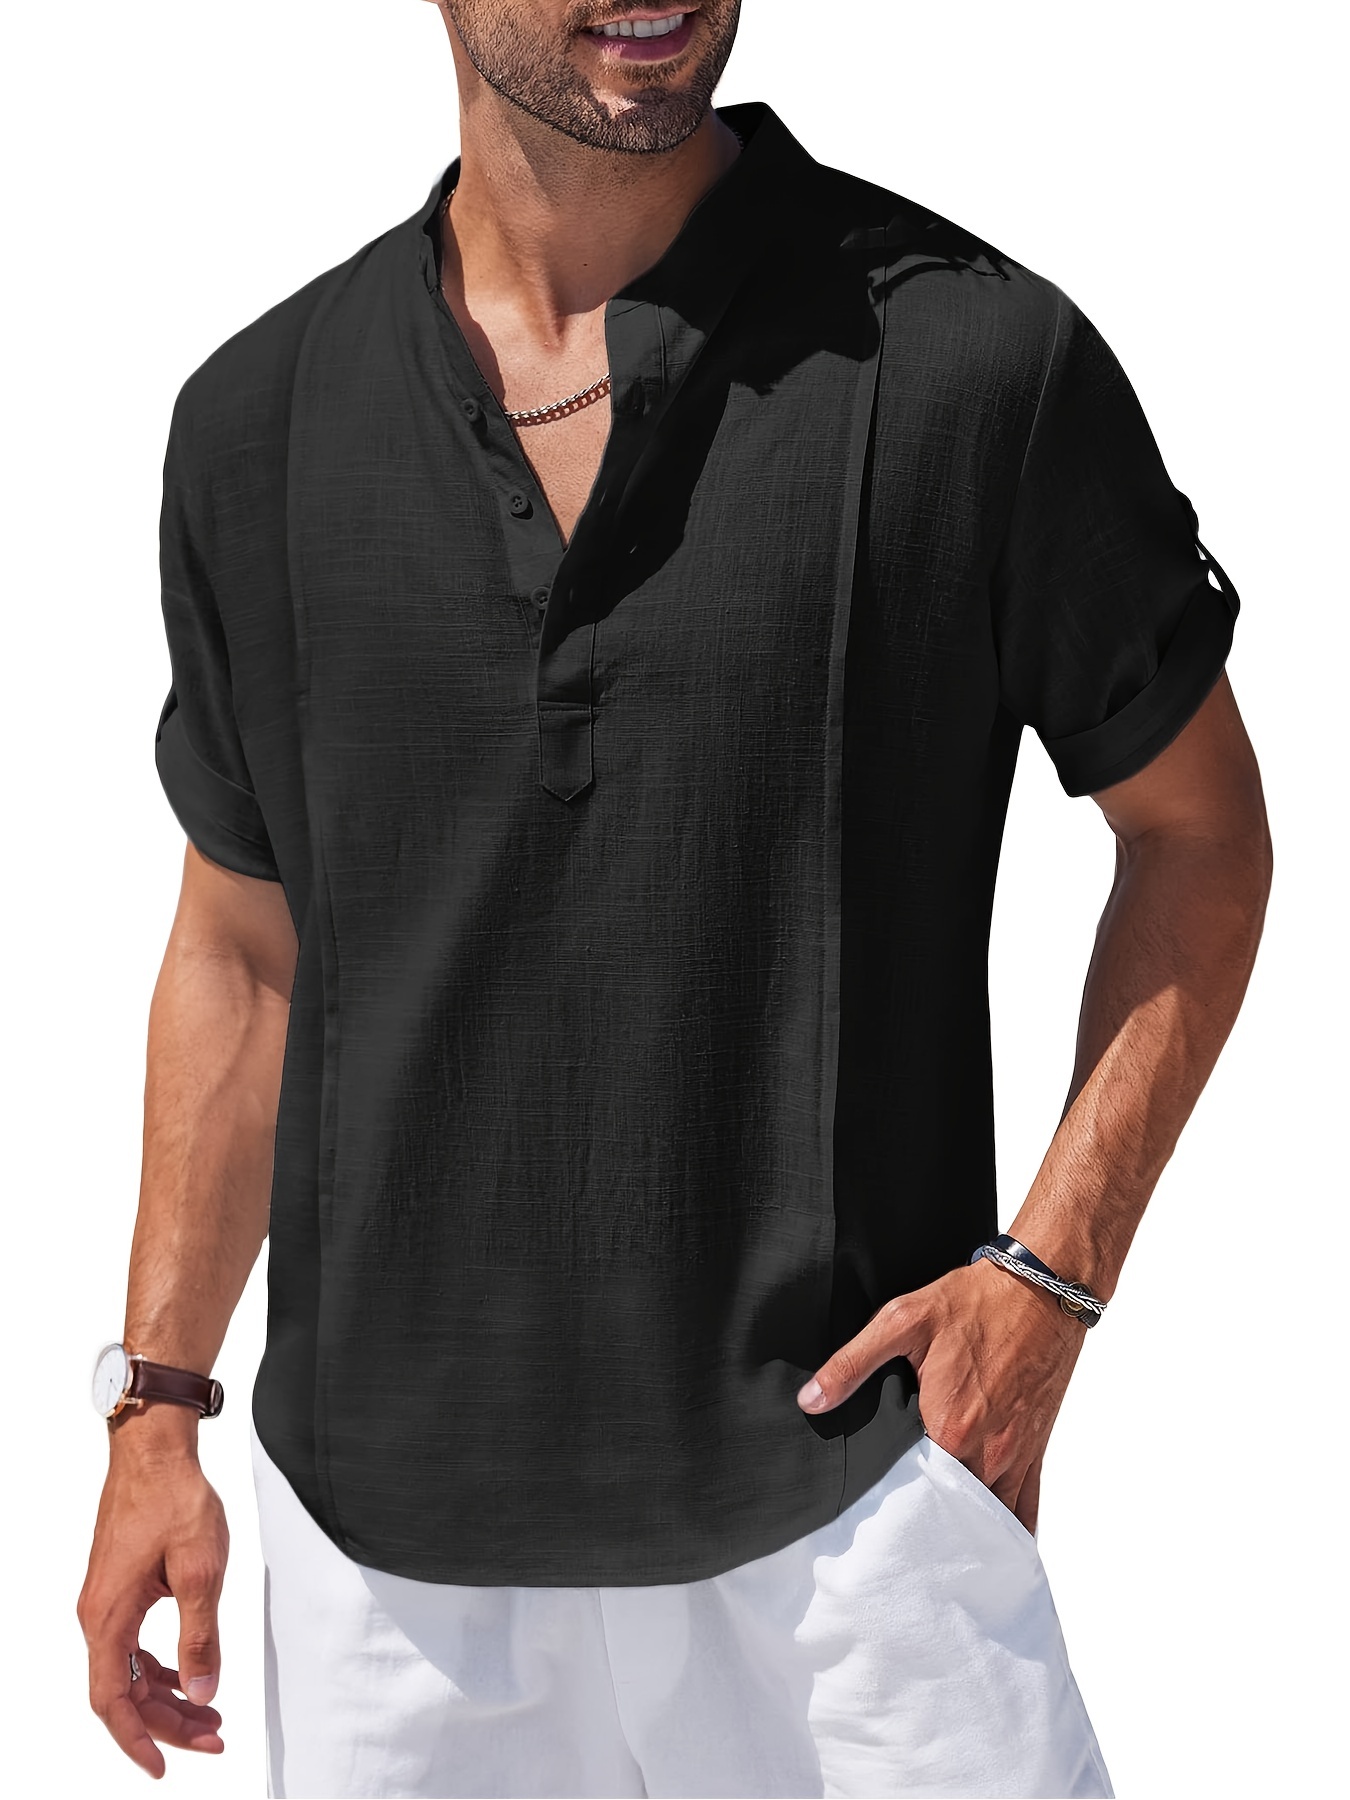 Cotton Full Sleeve Casual Shirt for Men - Black